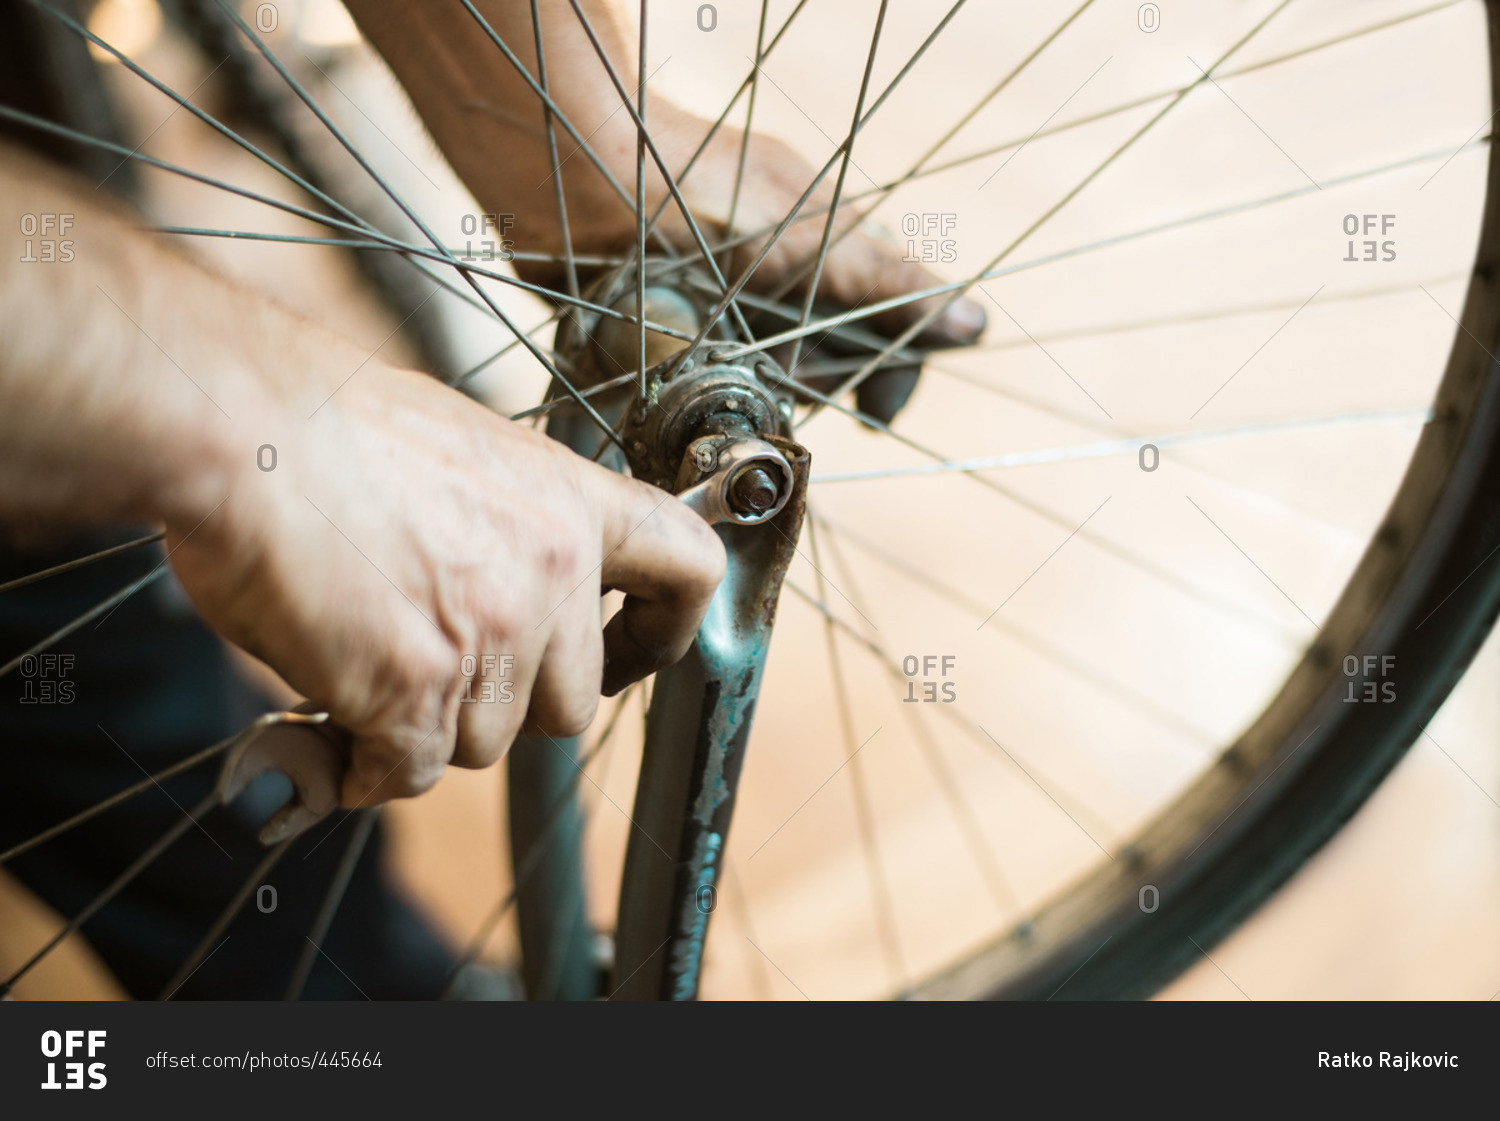 Man removing bike tire from a bike frame